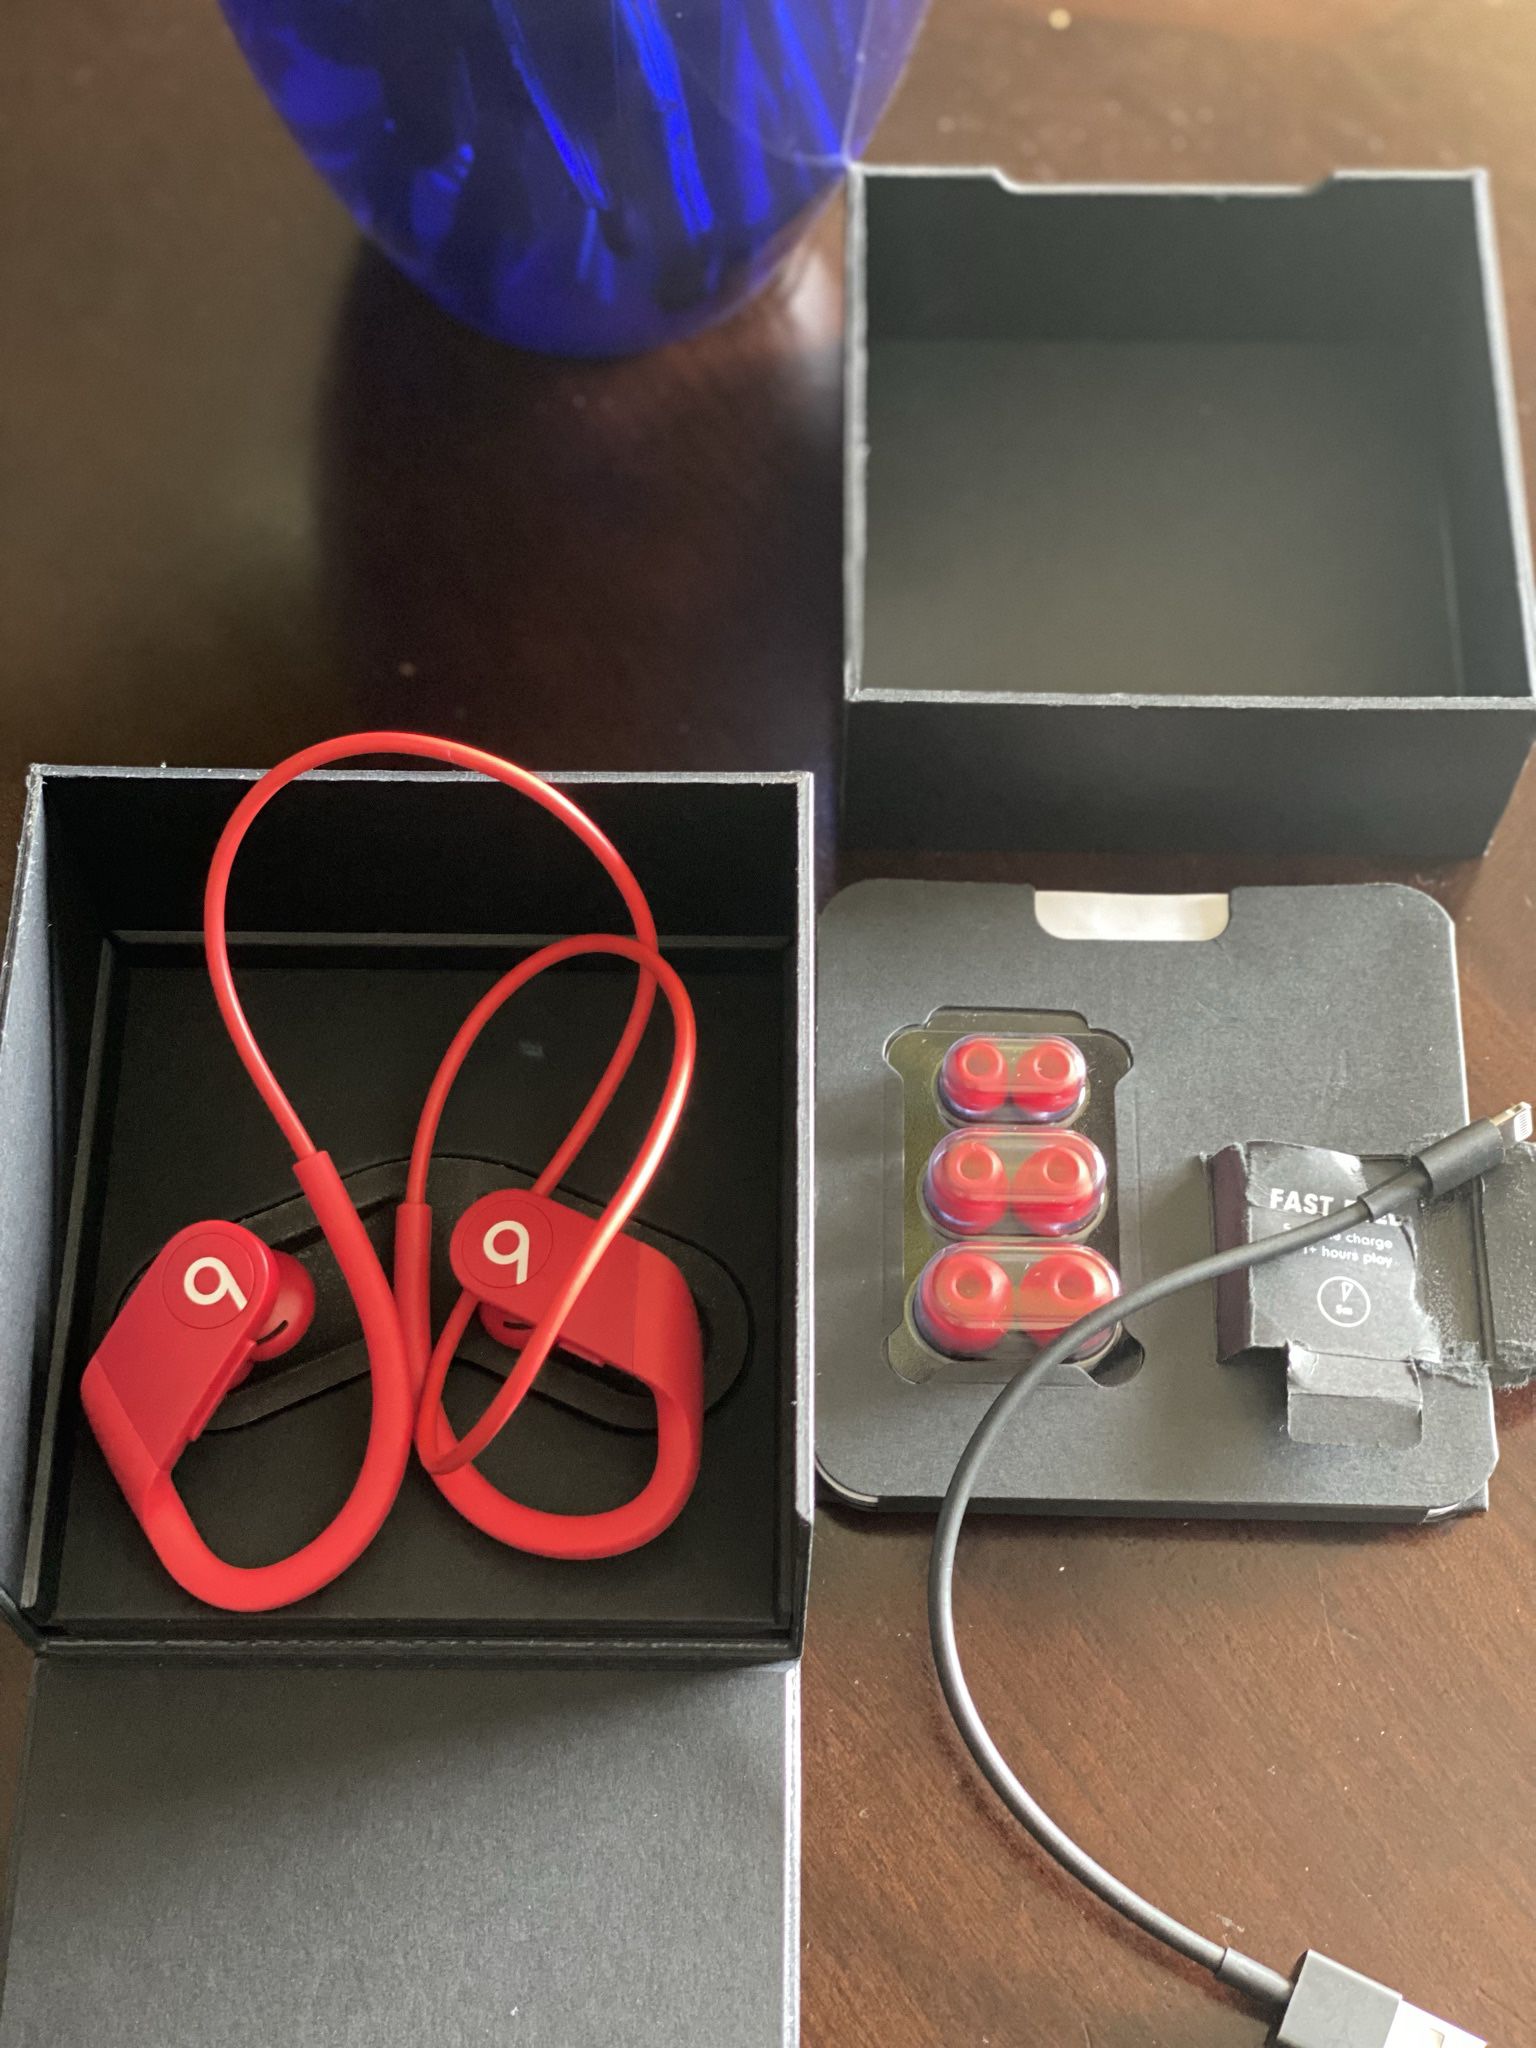 Brand New Beats by Dr Dre Powerbeats HighPerformance Wireless Earphones Red